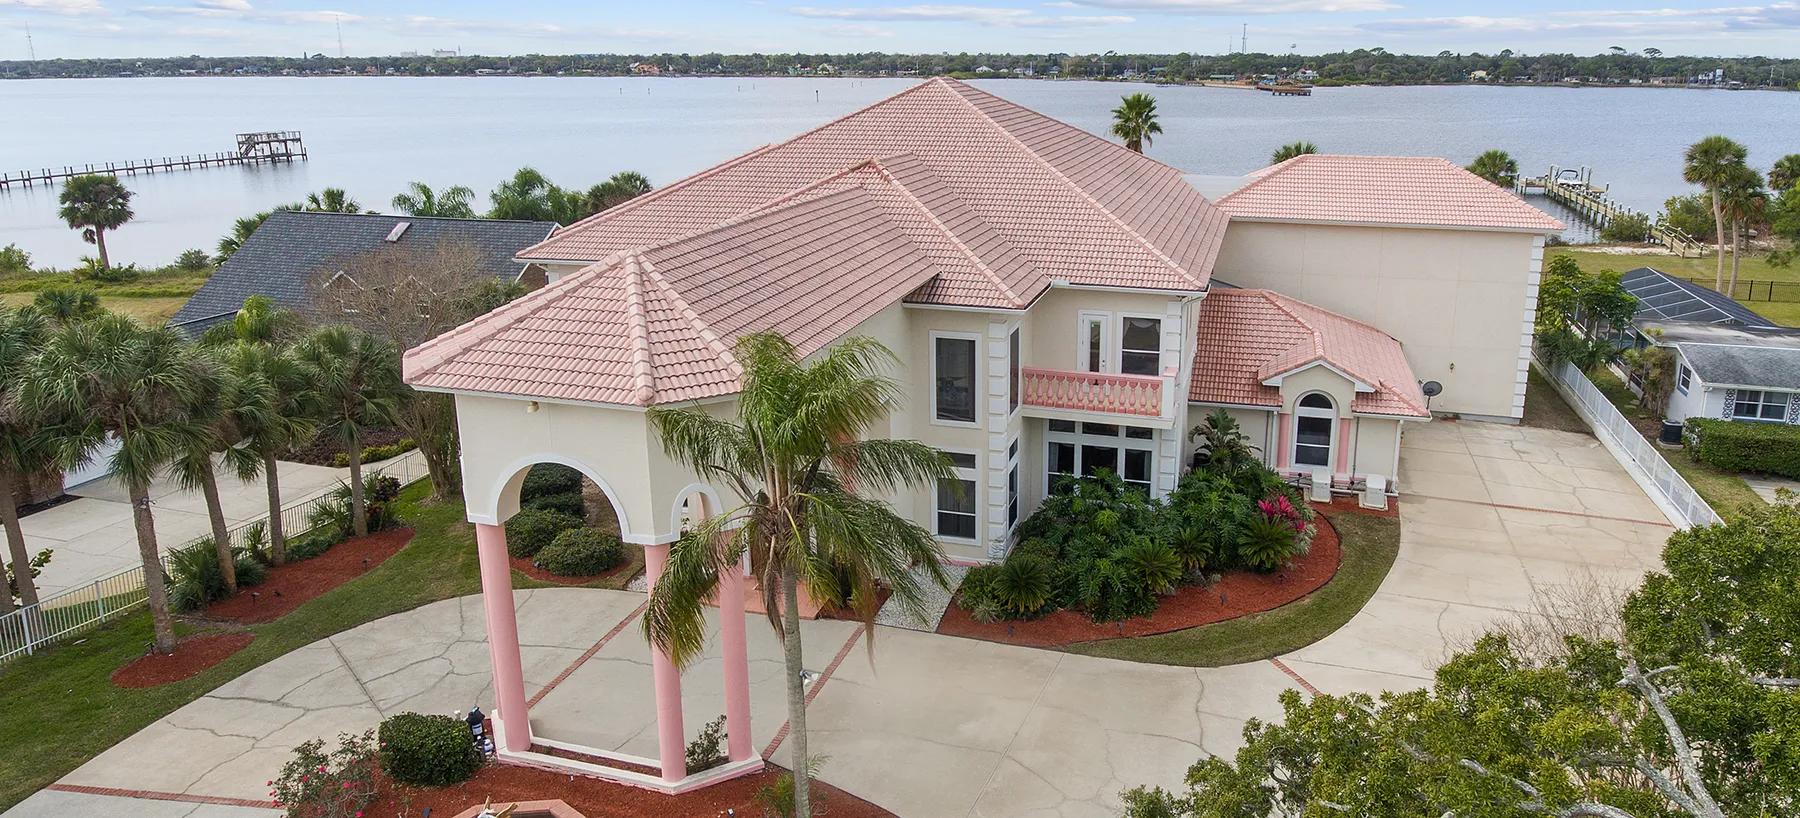 Find Luxury Real Estate in Daytona Beach | Corcoran Premier Realty